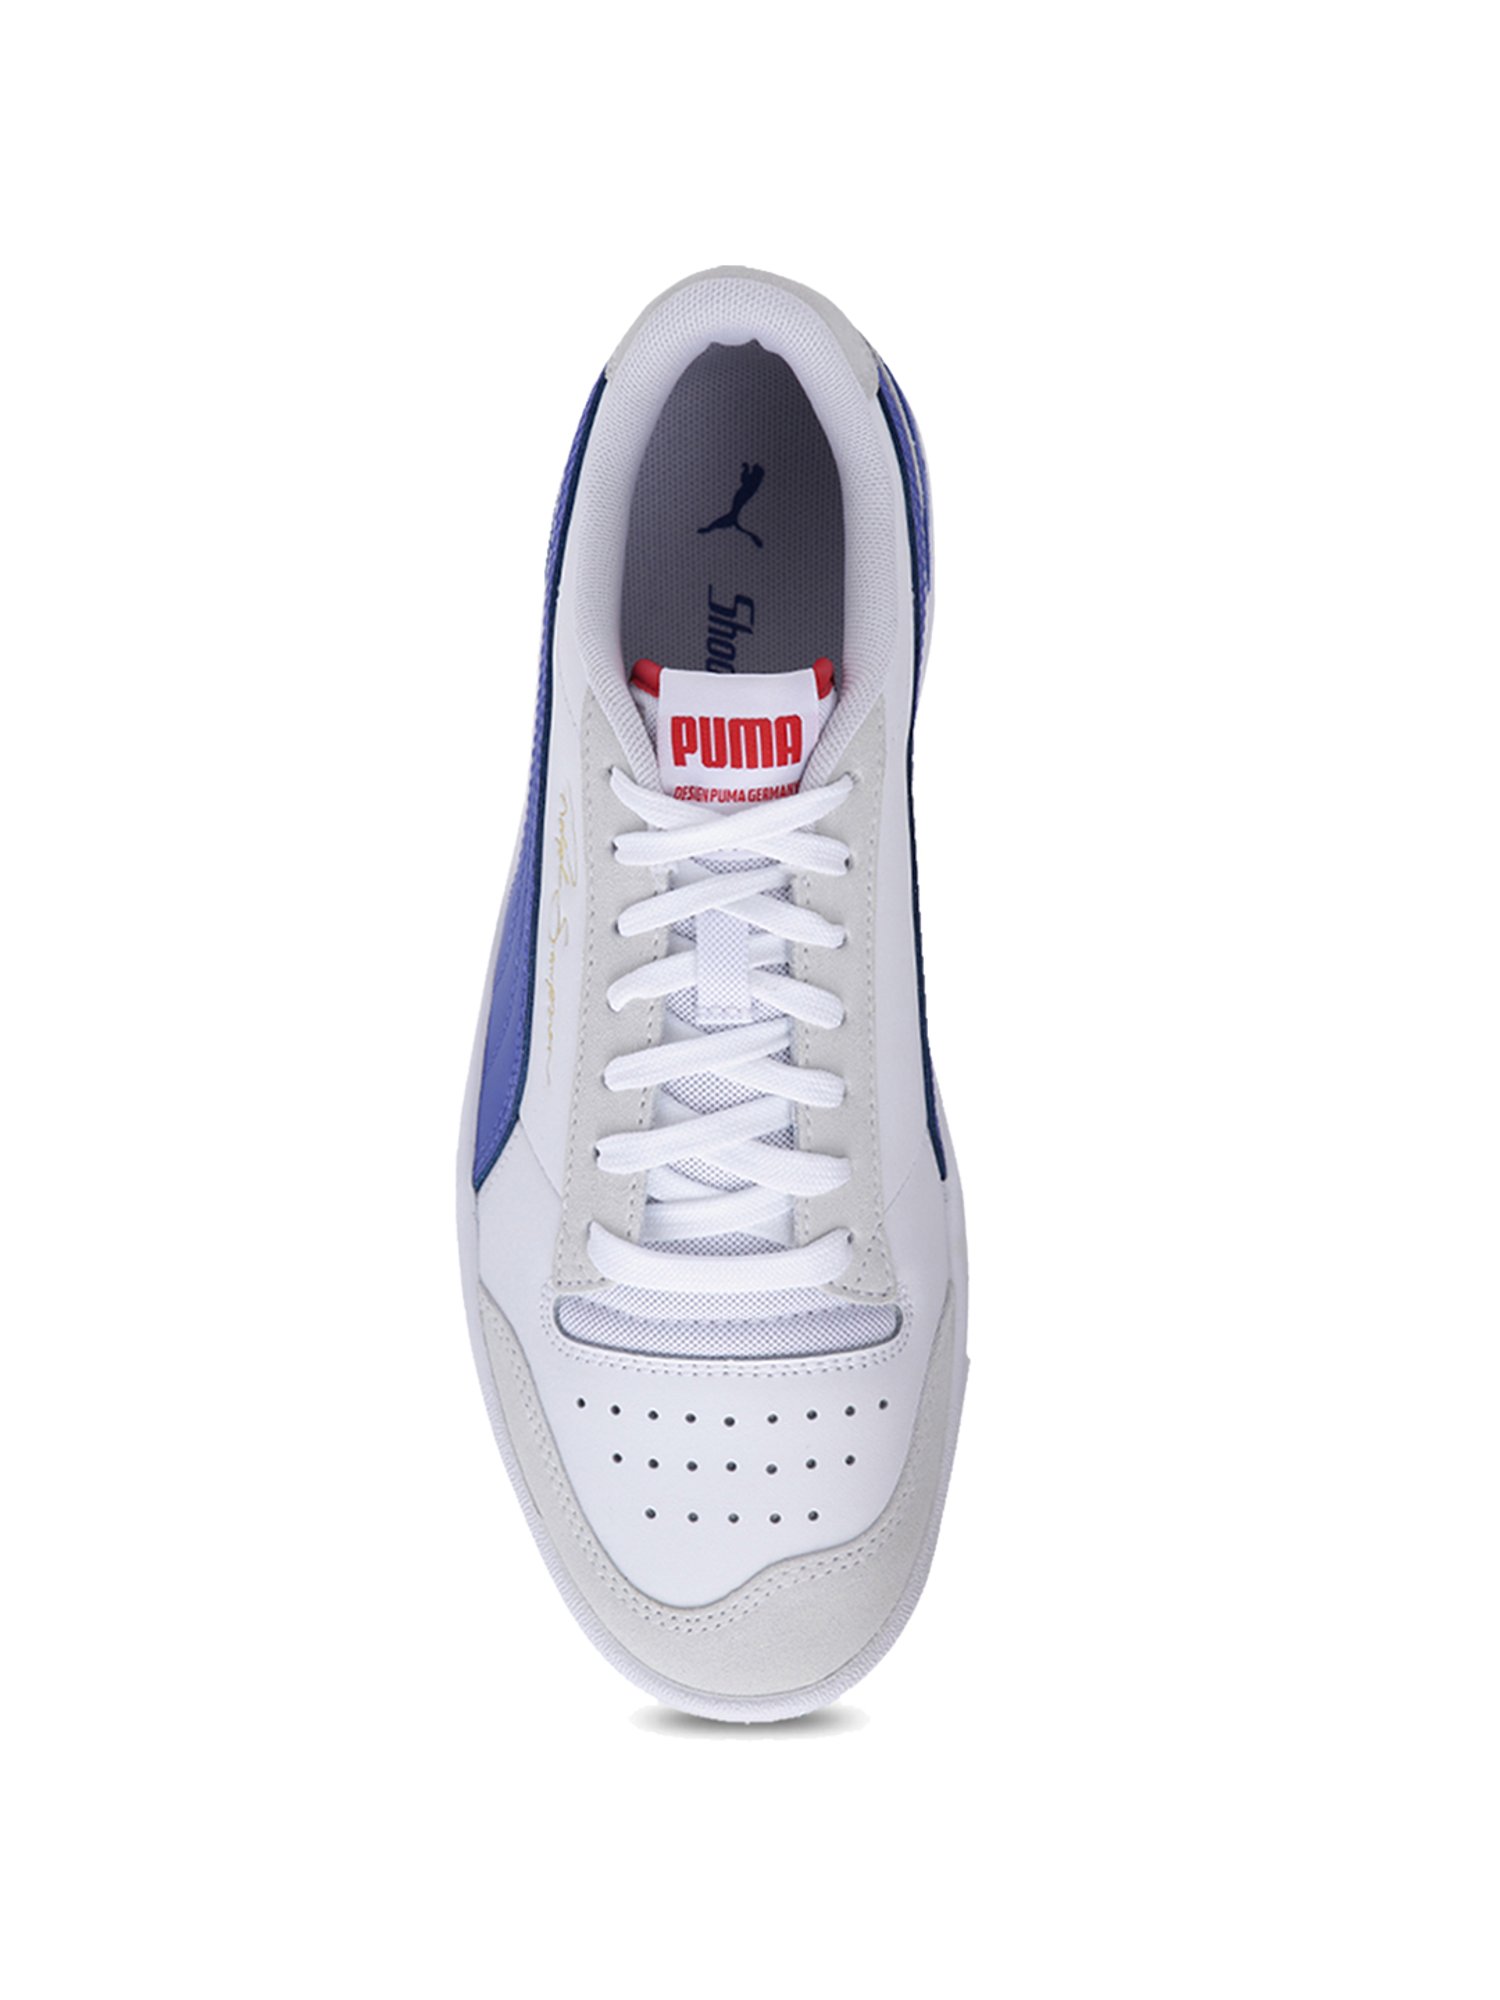 198s puma sneakers